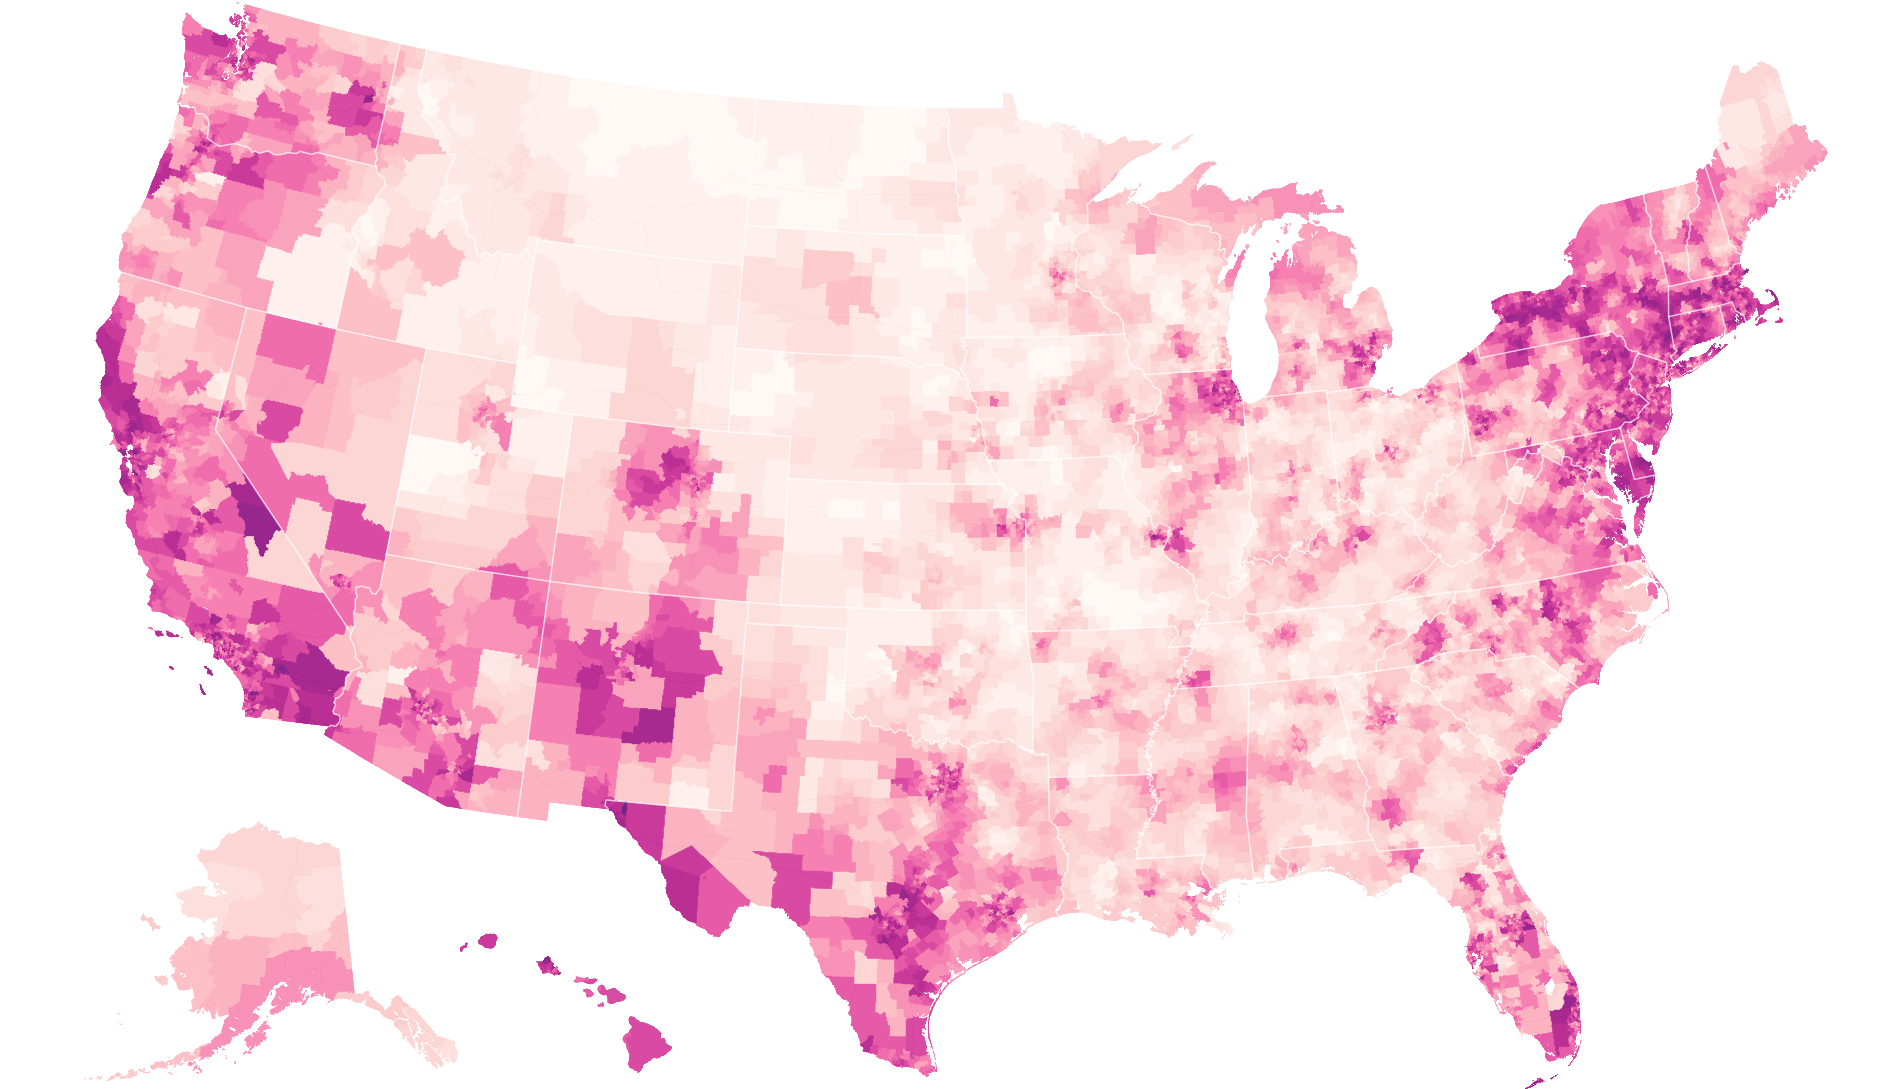 NYT Heatmap from Mask-Usage Data